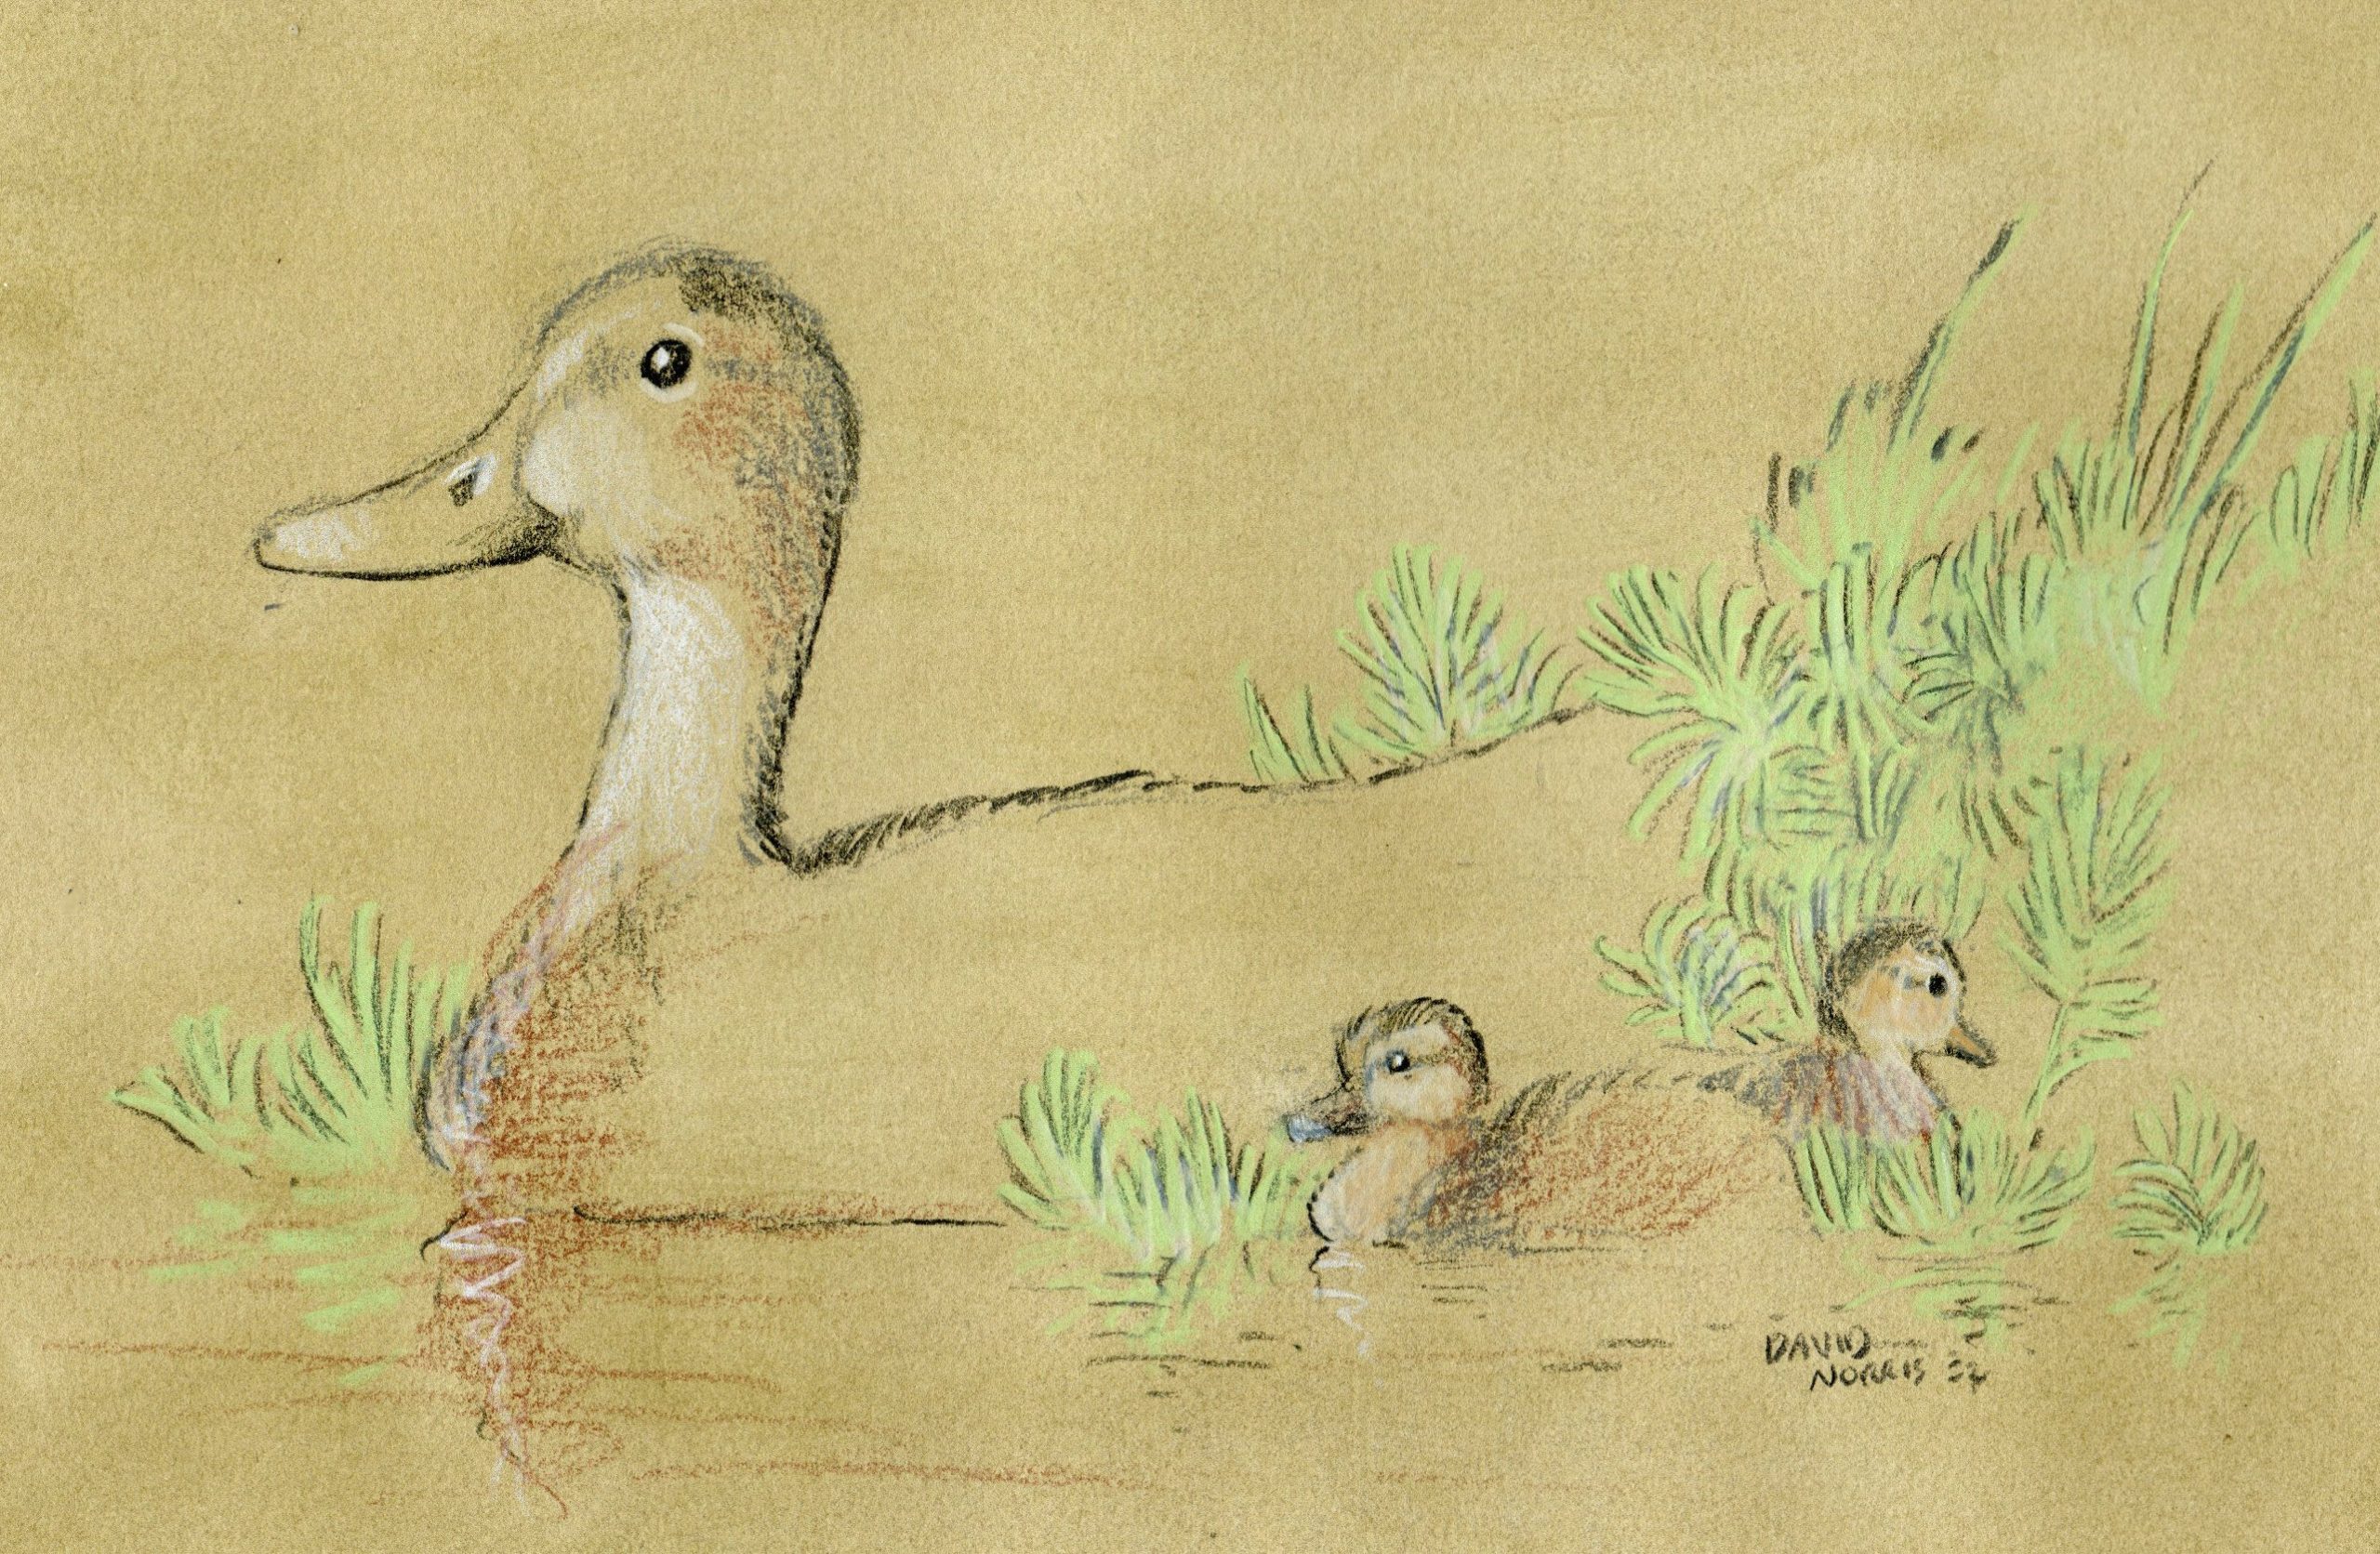 Original pen & ink wash drawing of a duck in flight on paper | eBay